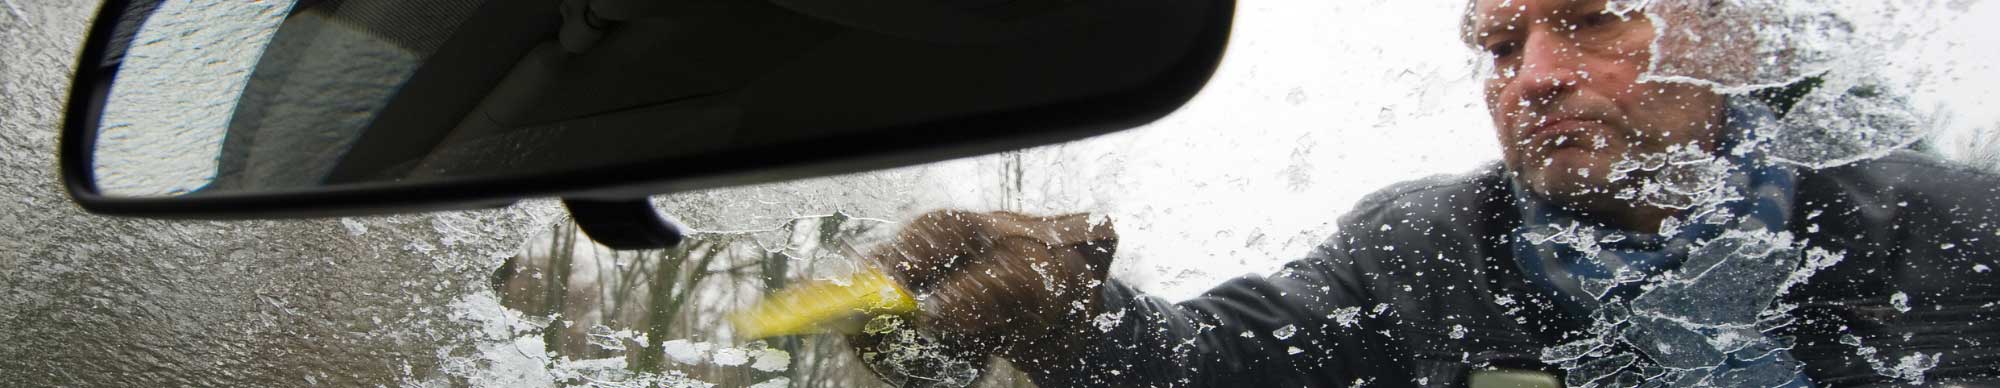 Man using window scraper to scrape snow off of car 